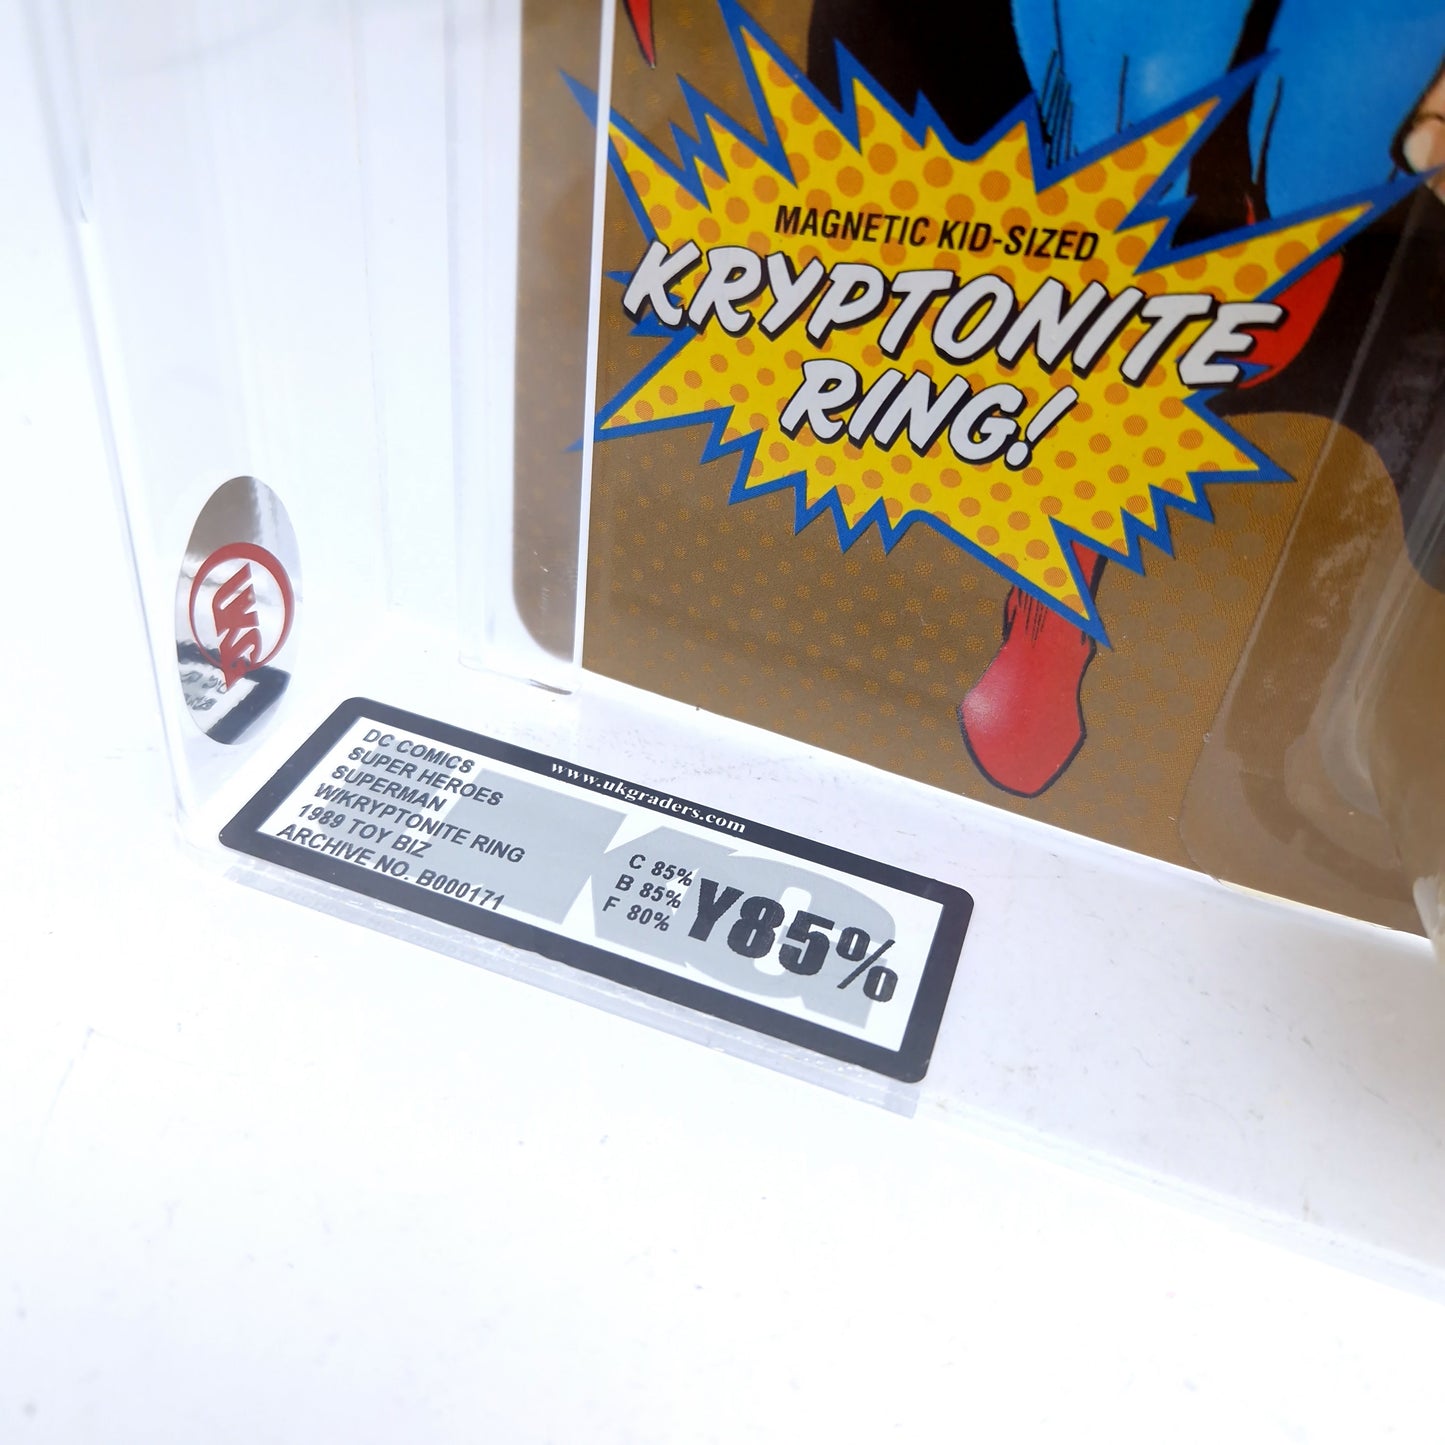 DC COMICS SUPER HEROES ☆ SUPERMAN GRADED 85Y UKG Action Figure ☆ Toybiz Sealed Carded